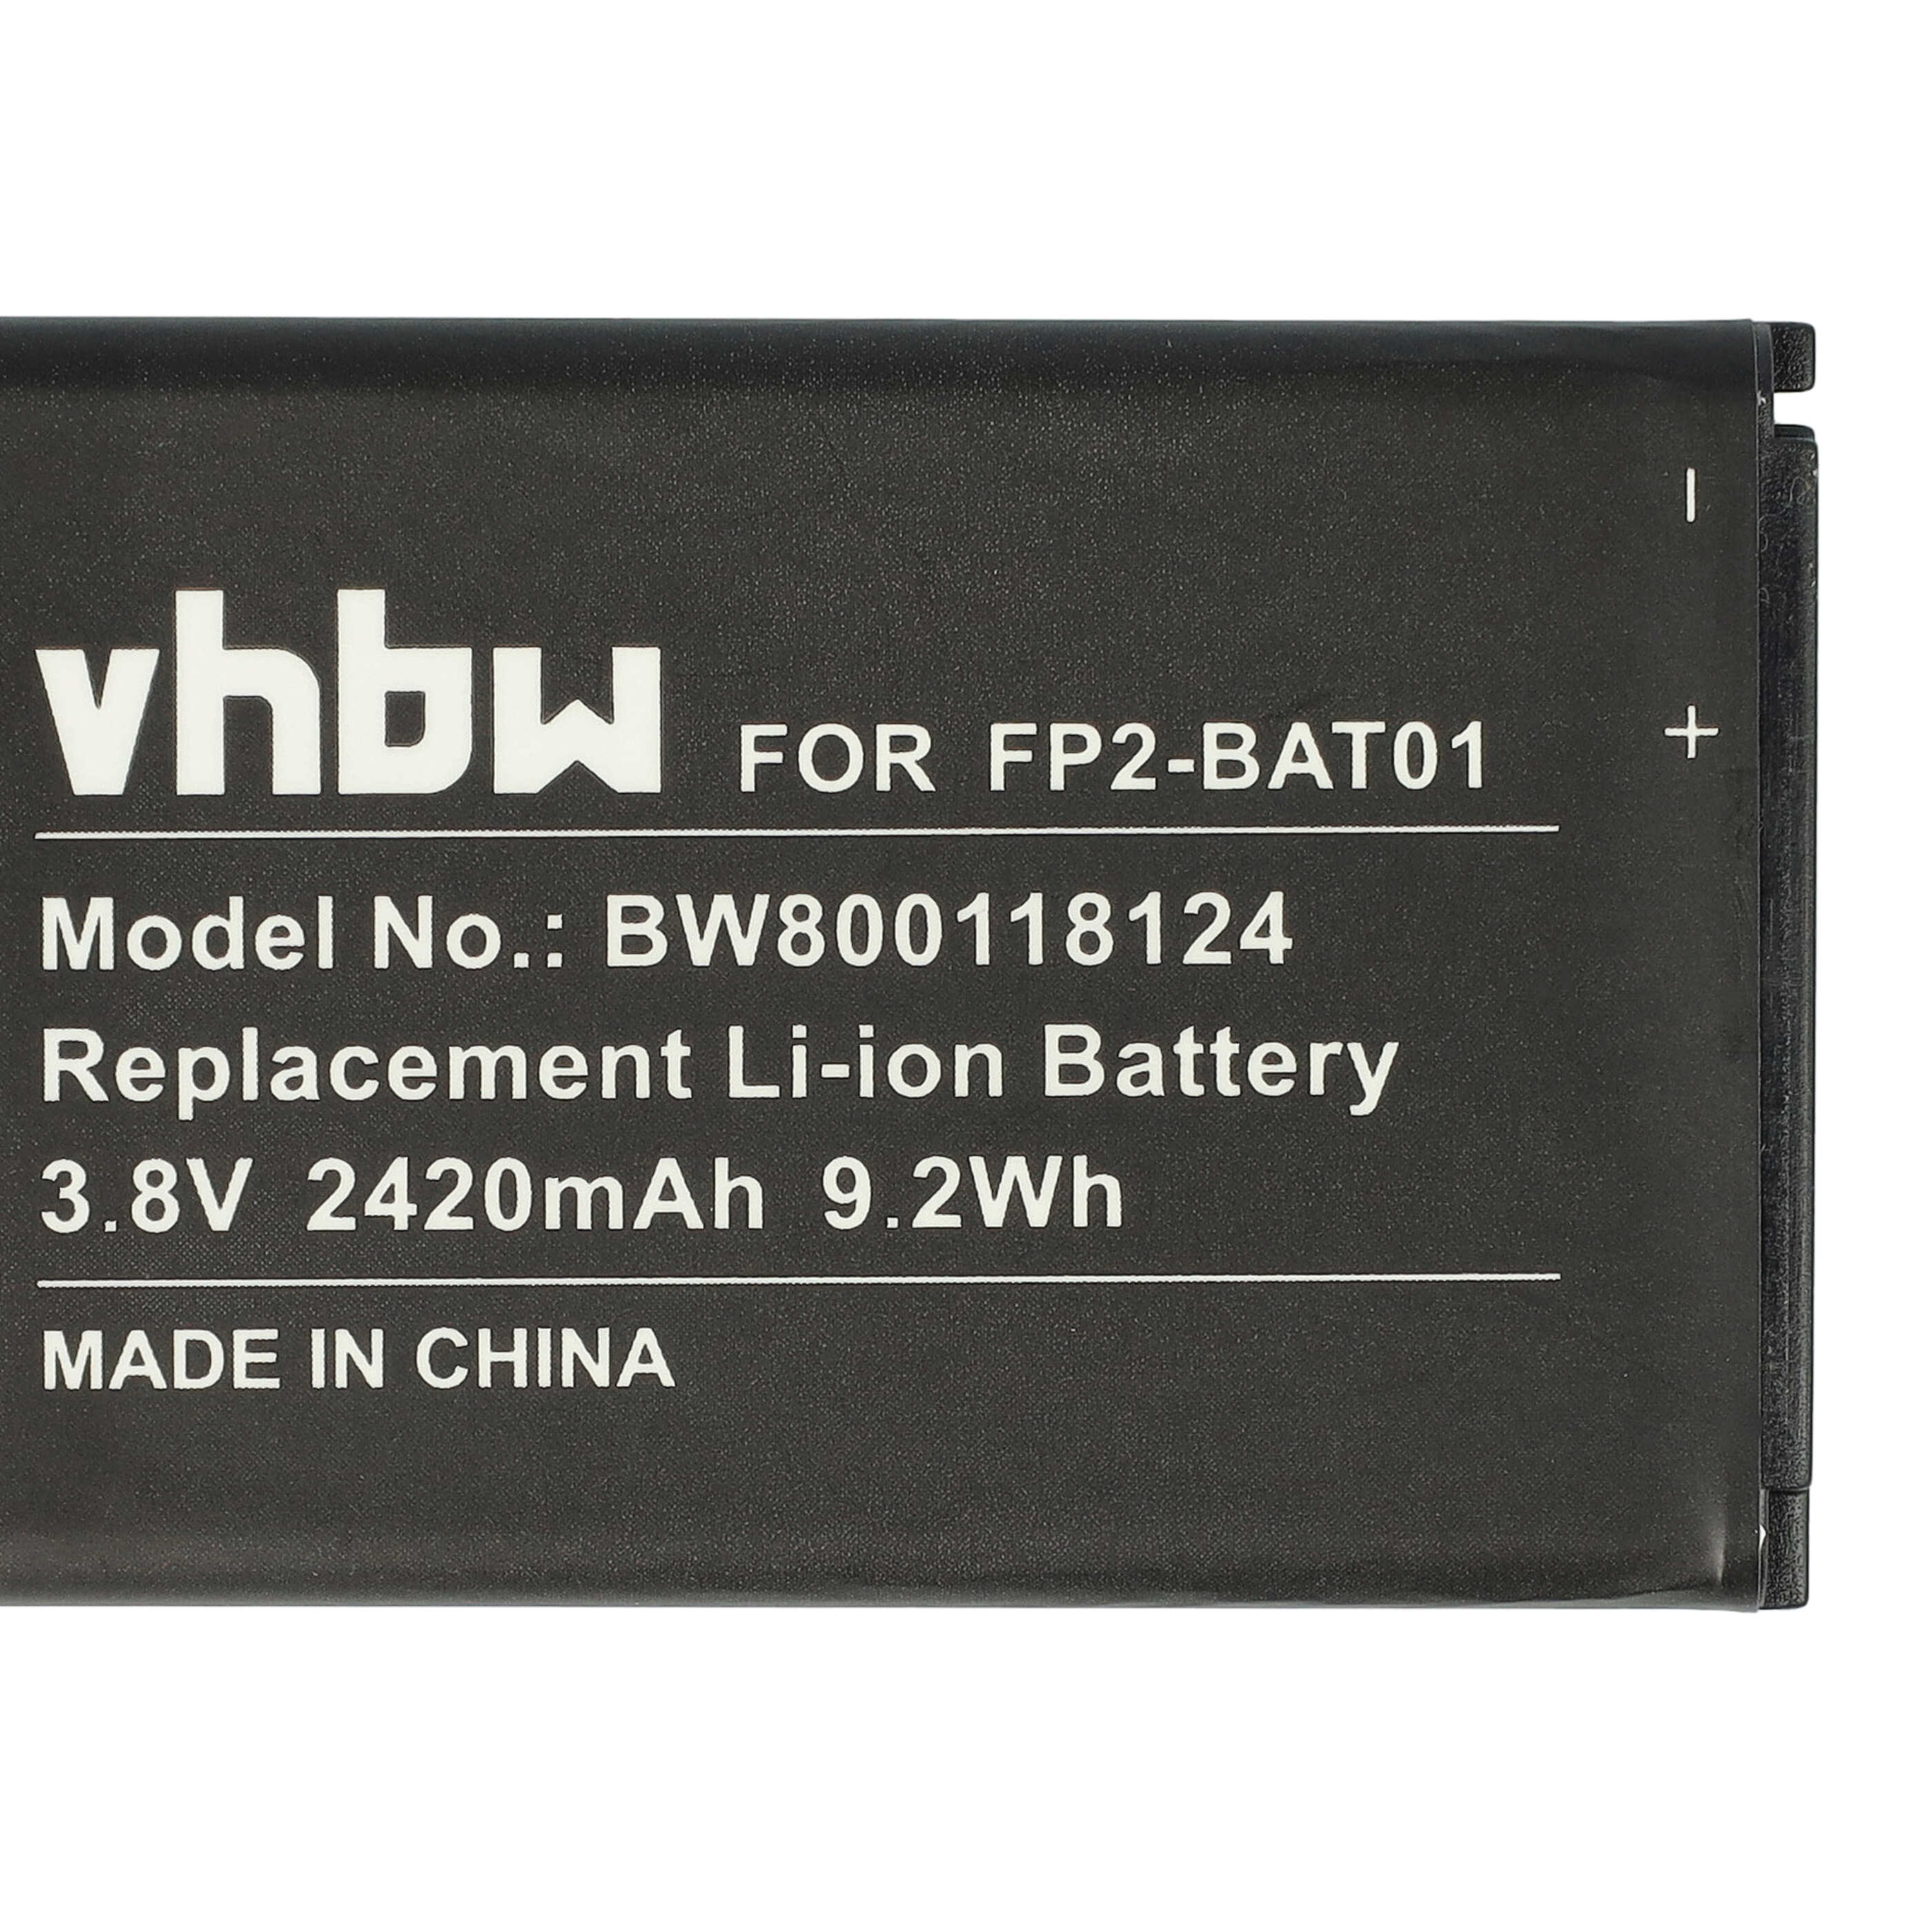 Batería reemplaza Fairphone FP2-BAT01 para móvil, teléfono Fairphone - 2420 mAh 3,8 V Li-Ion